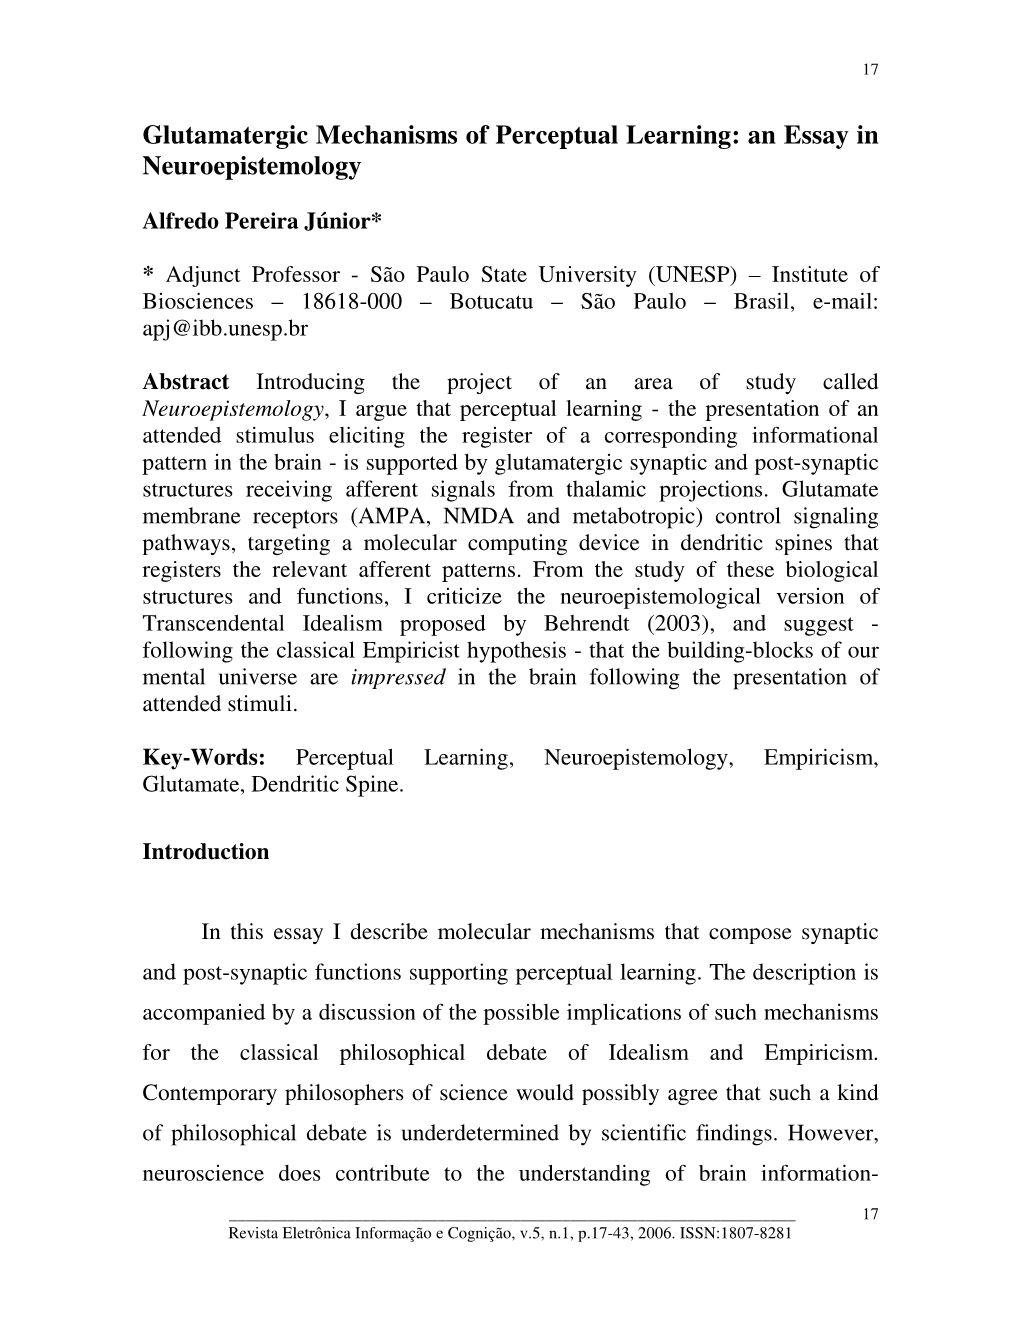 Glutamatergic Mechanisms of Perceptual Learning: an Essay in Neuroepistemology